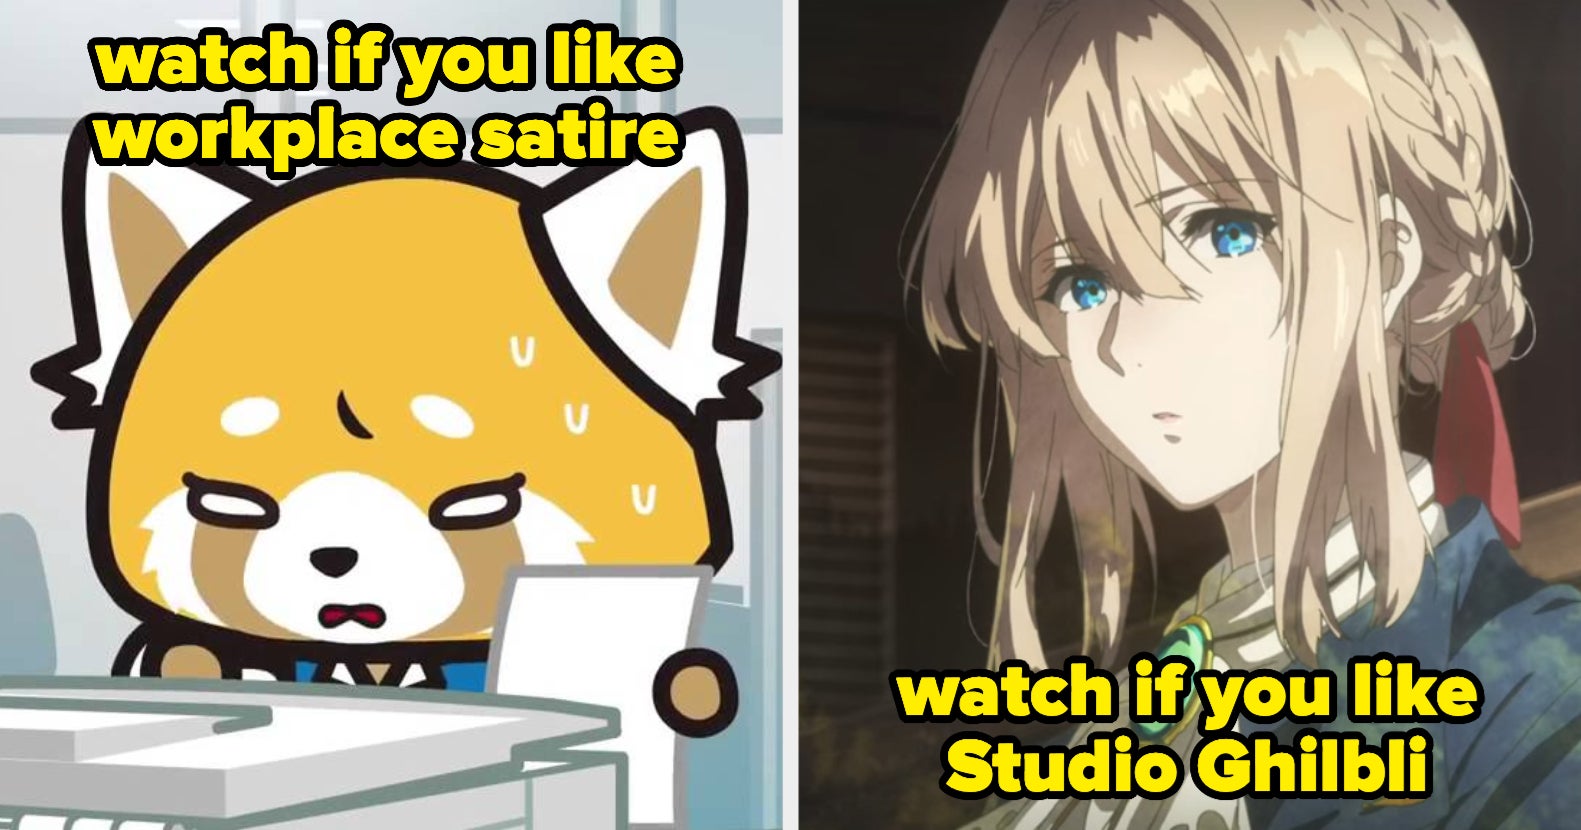 6 Parody Anime to Watch If You Like Making Fun of Anime